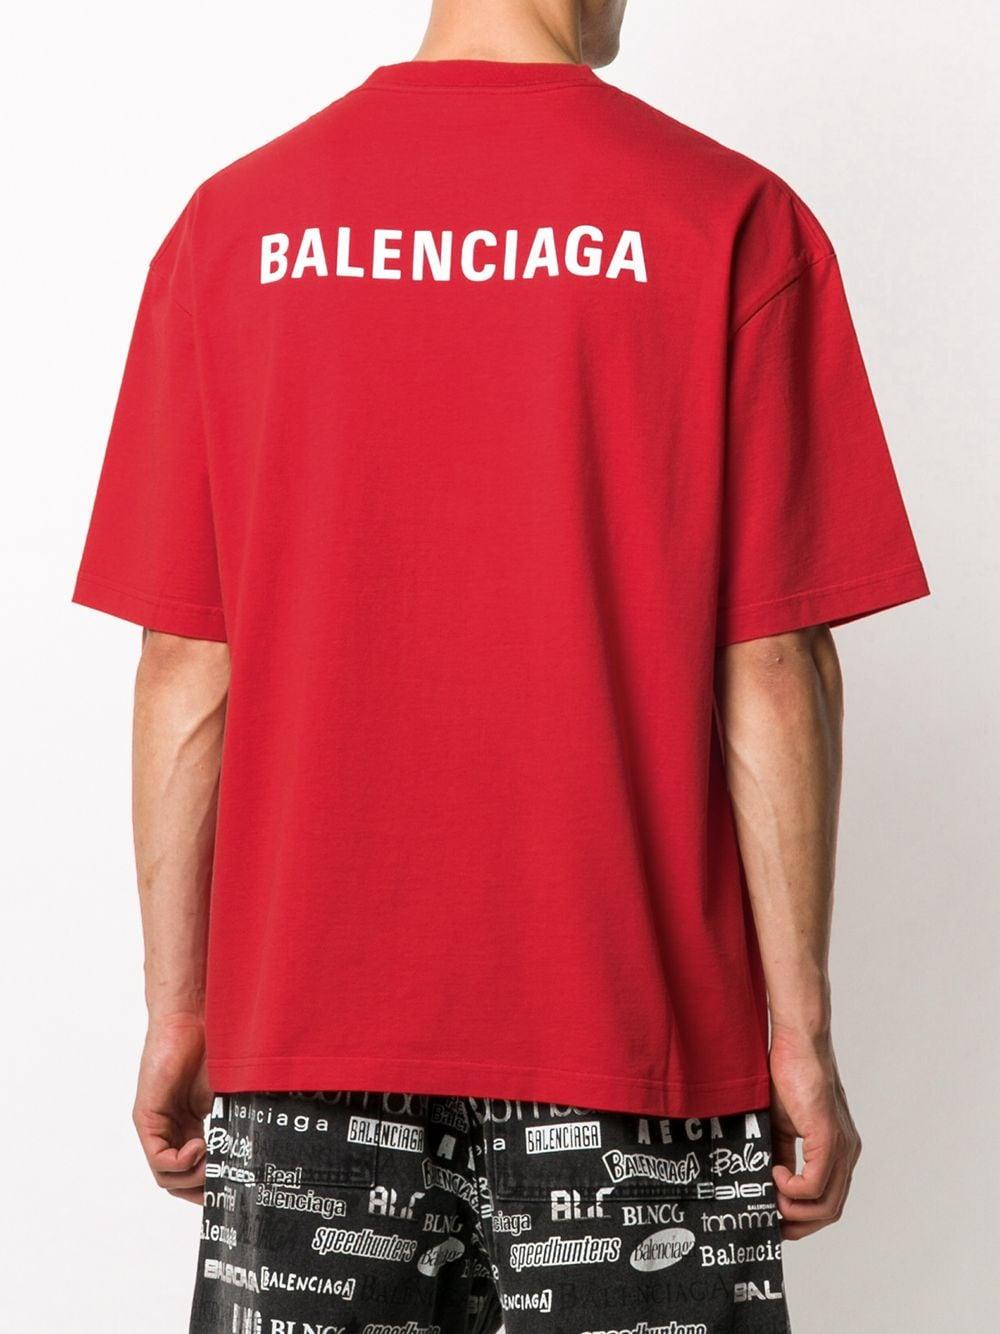 Balenciaga Logo-print Cotton T-shirt in Red for Men - Lyst